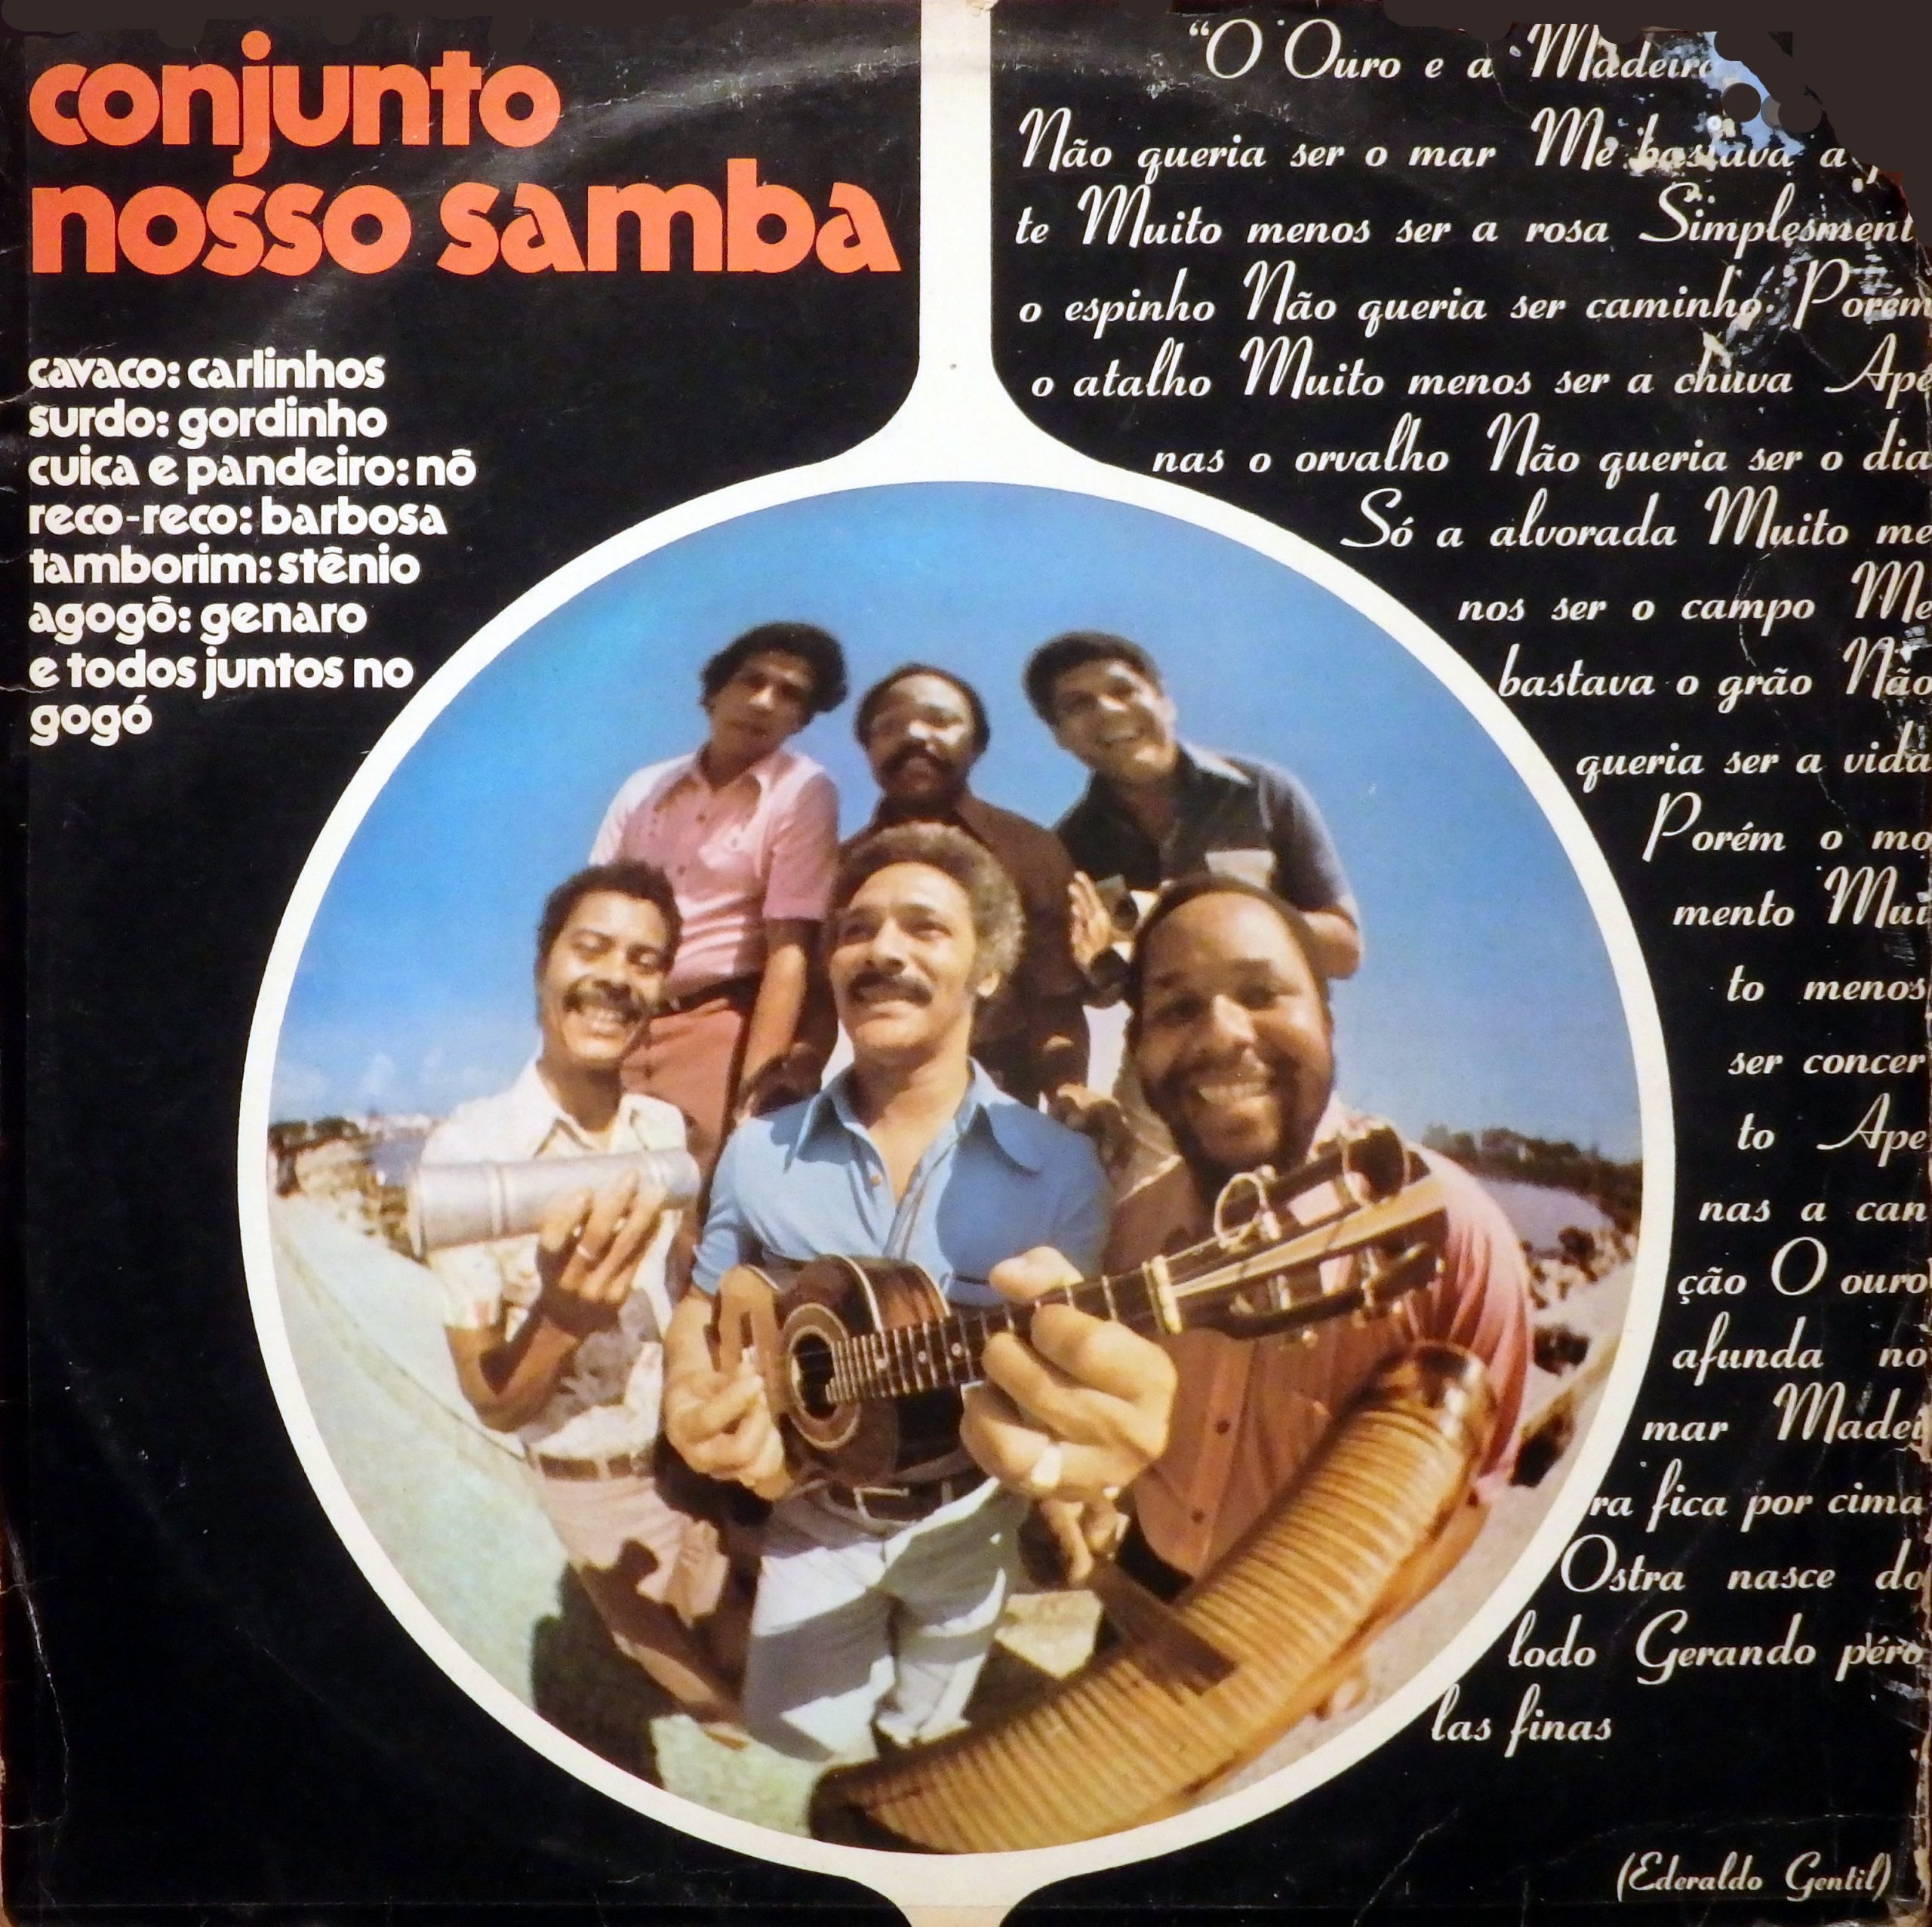 CLARA NUNEZ: Brasil Mestico Odeon Brazil Samba MPB Vinyl LP Samba